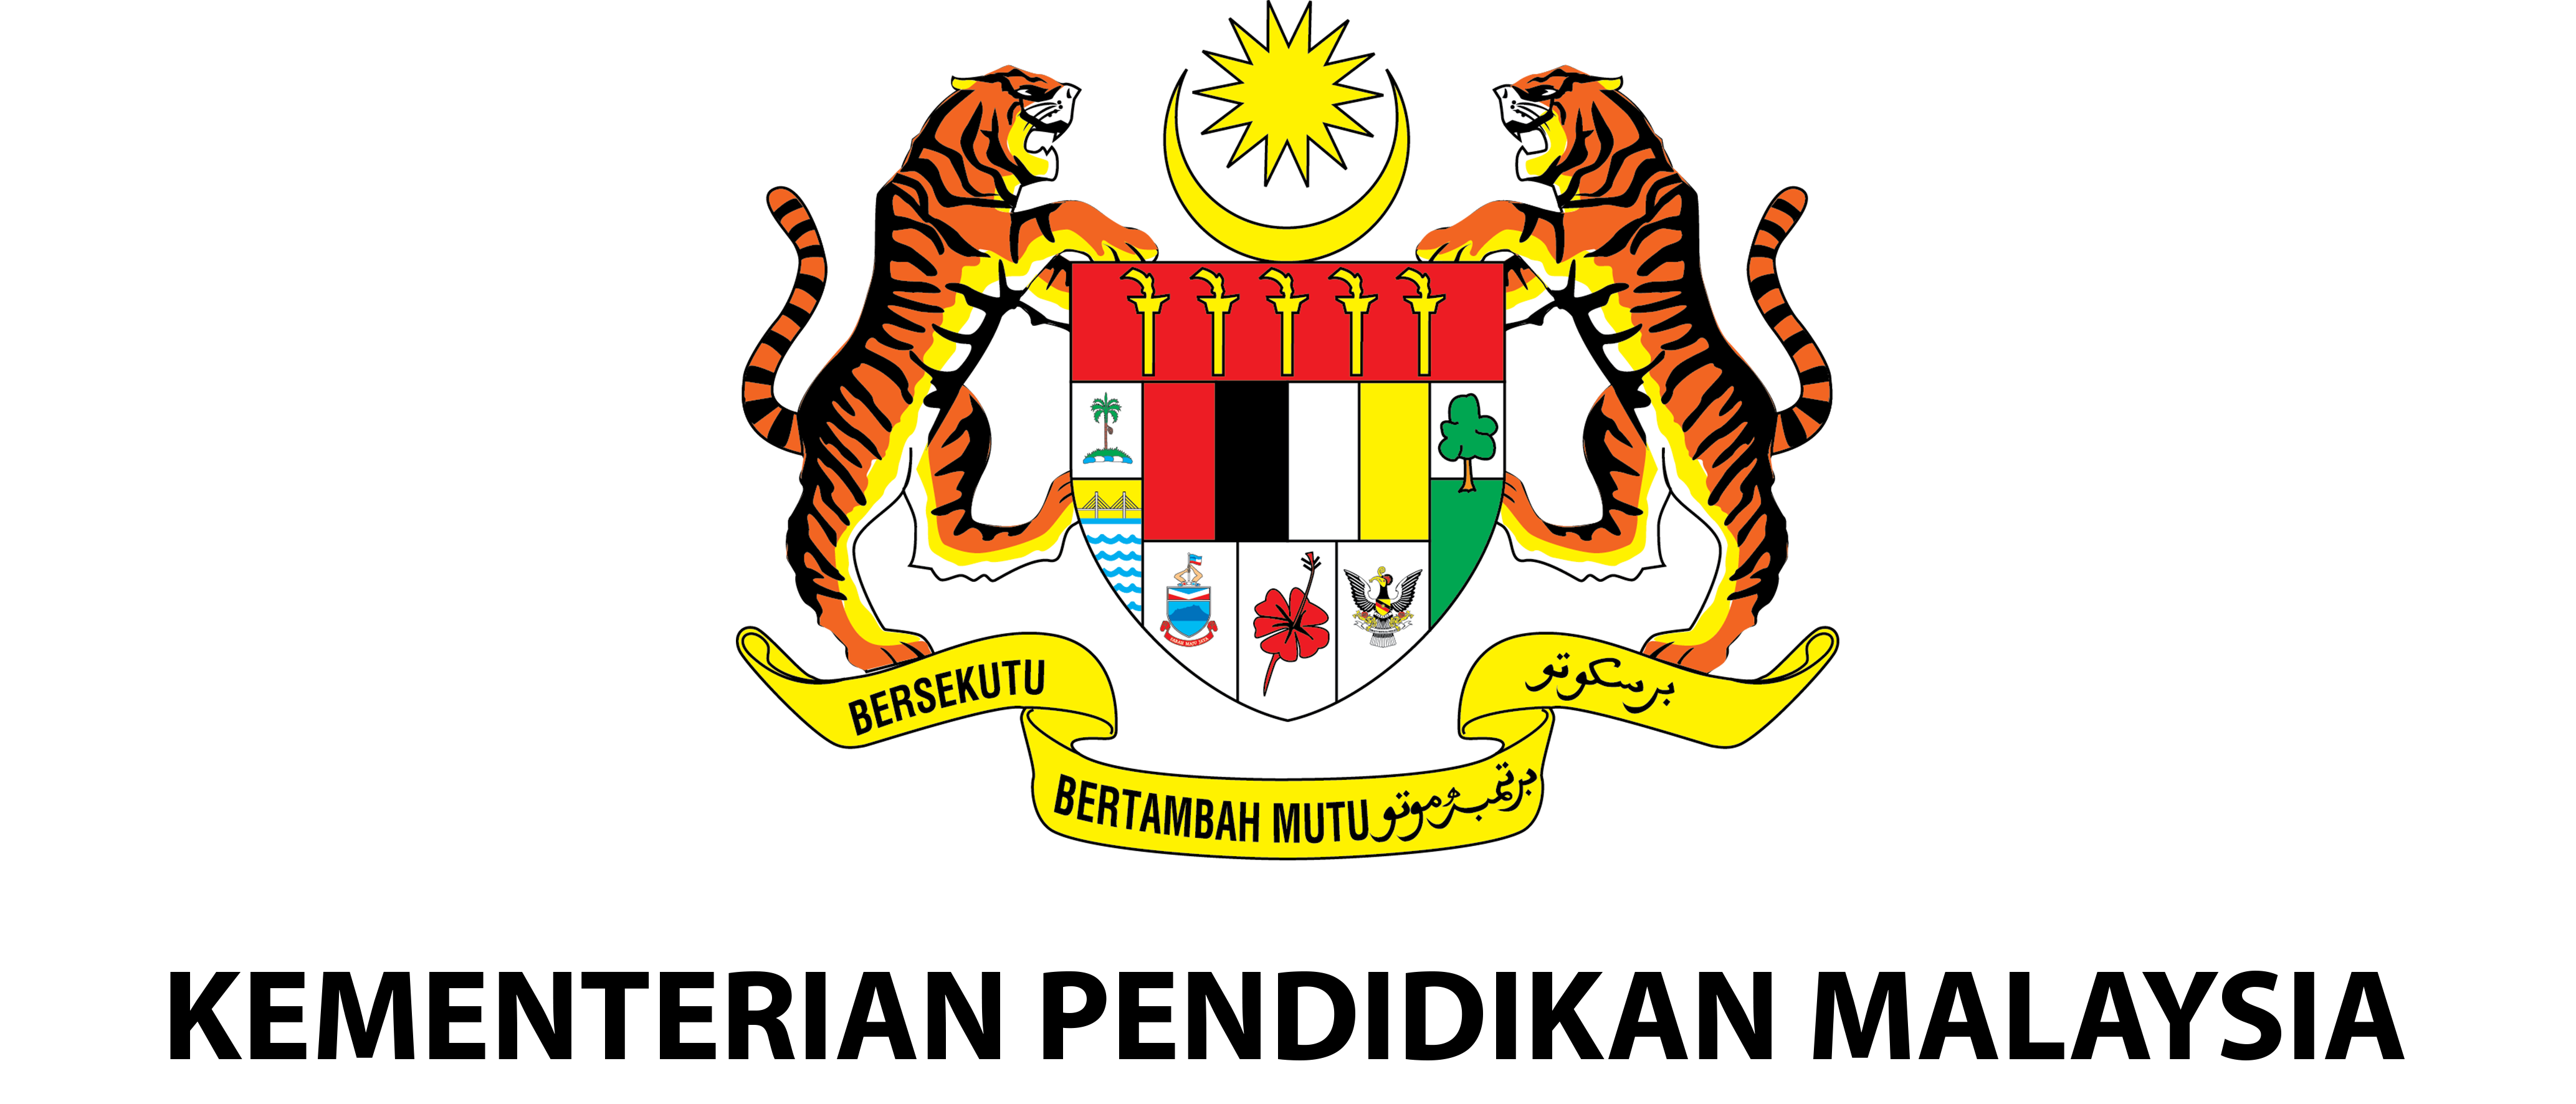 Logo Baharu Kpm 2020 Kementerian Pendidikan Malaysia Cikgu Ayu Dot My